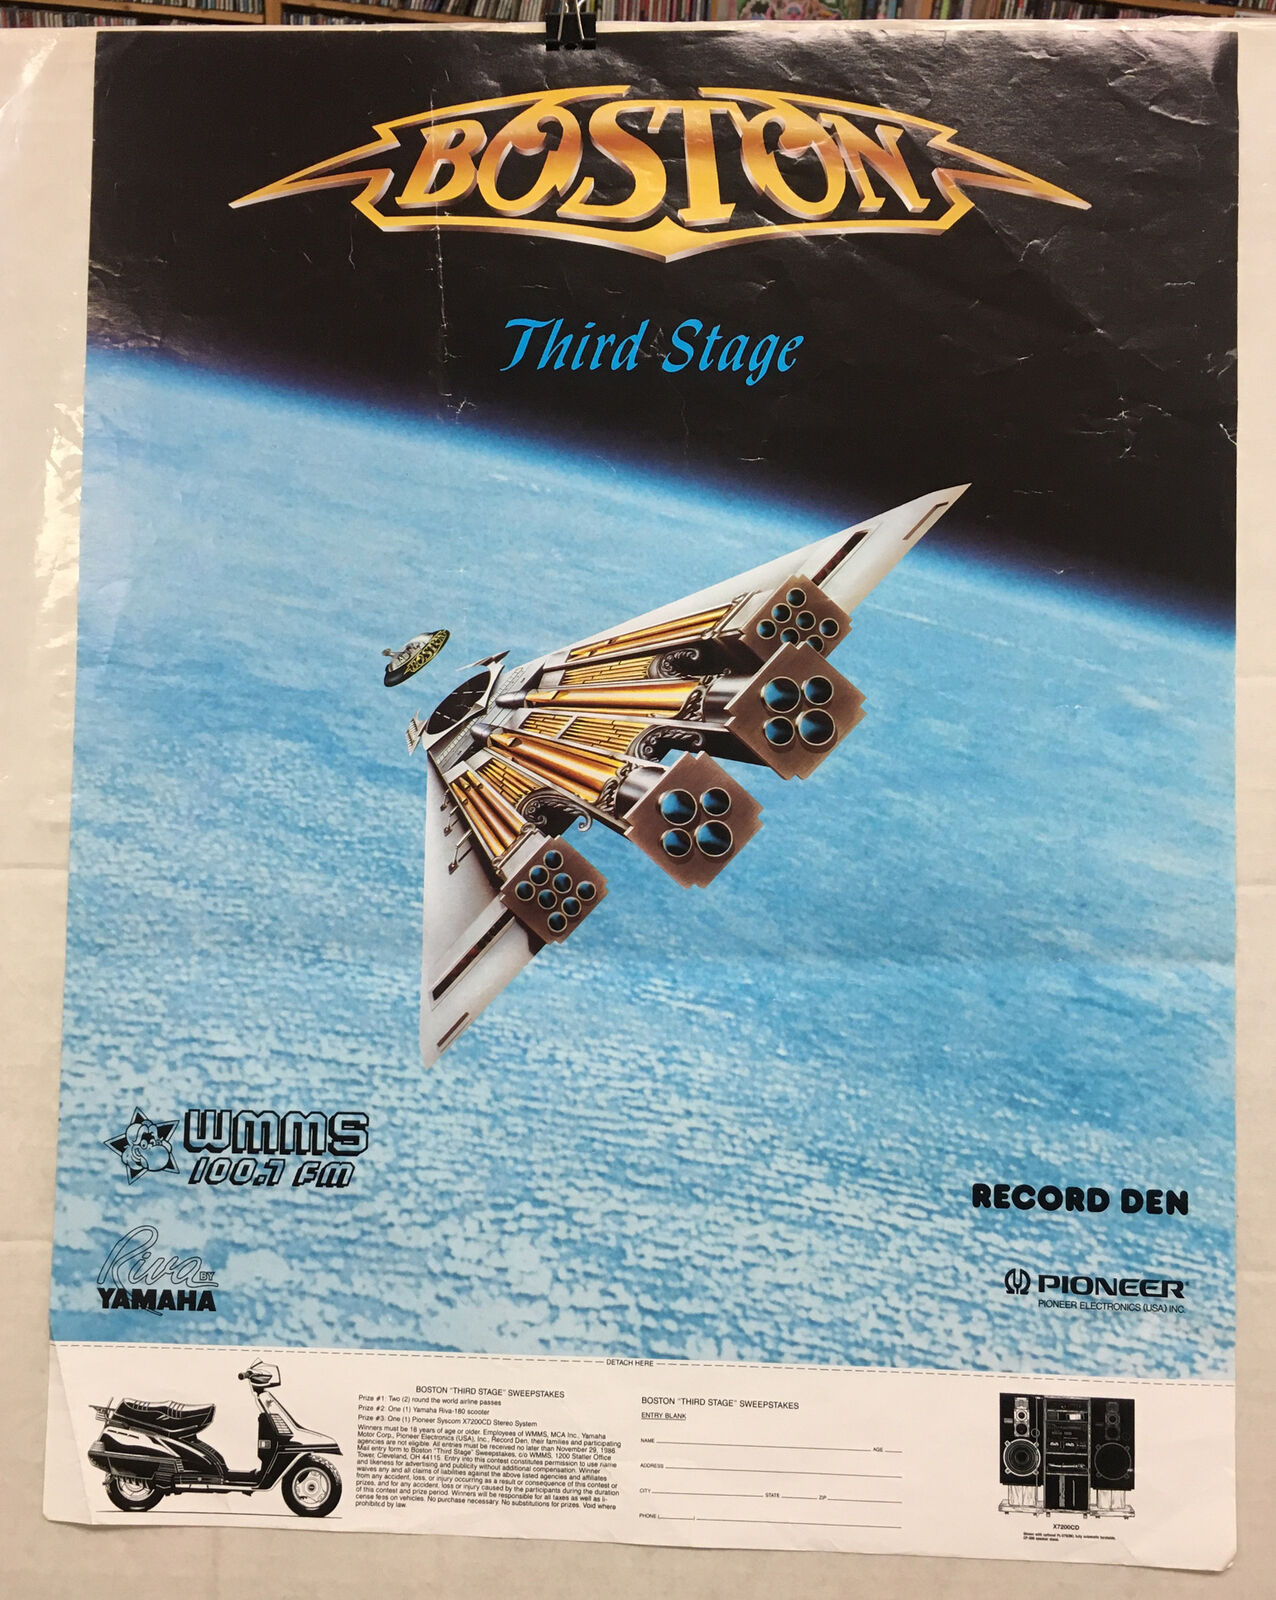 BOSTON  Third Stage  rare original promo poster from 1986 WMMS Version